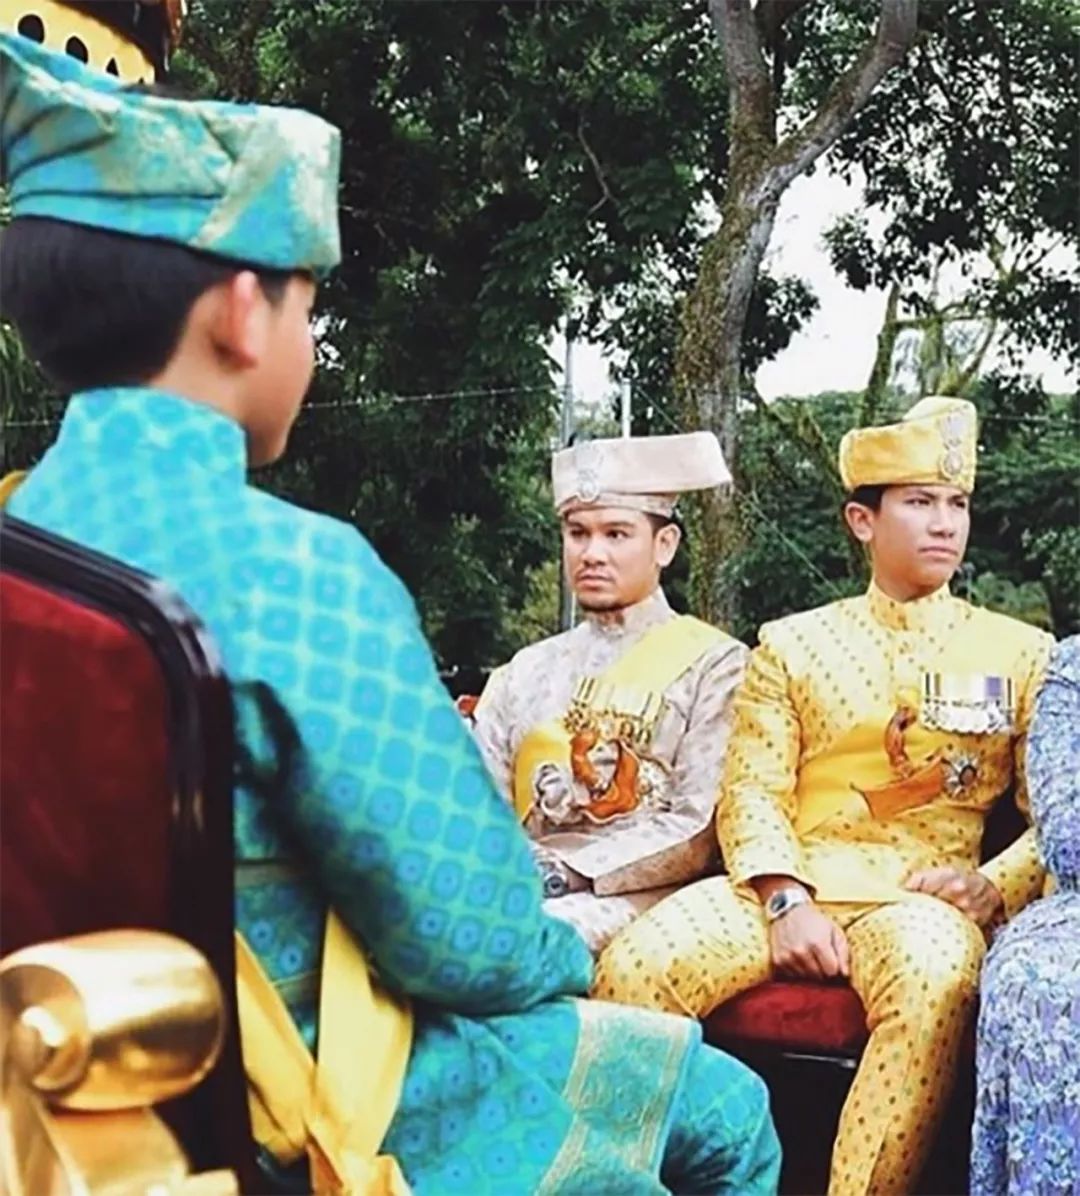 Sultan of Brunei’s son celebrates wedding in lavish ceremony | Al ...